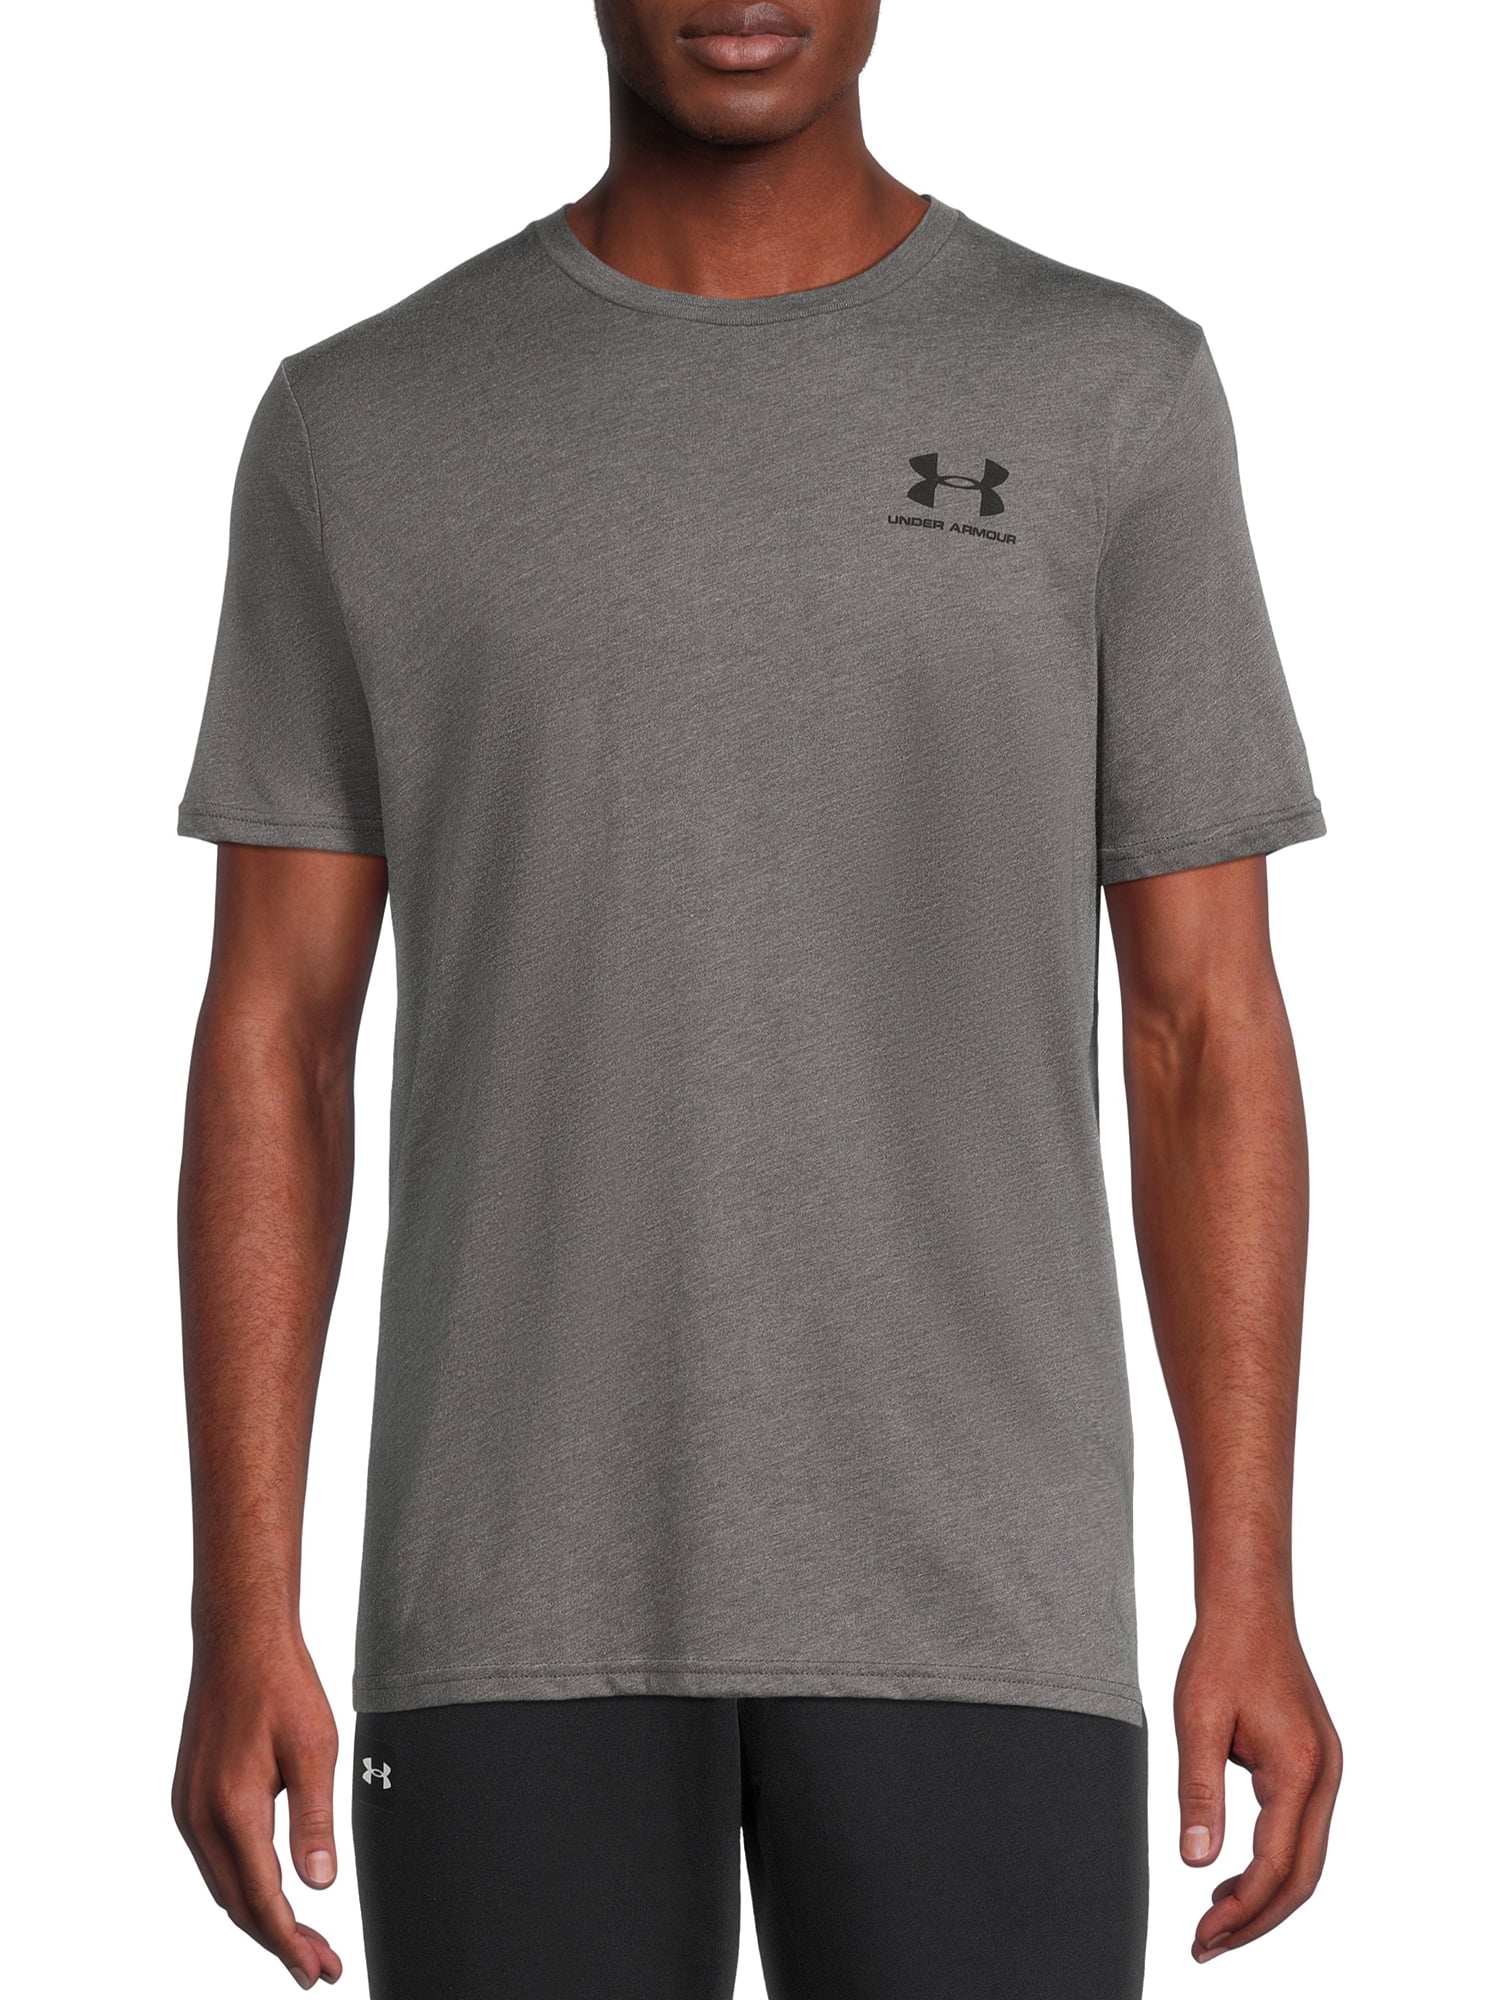 Mens Under Armour UA Sport Style Left Chest Short Sleeve T Shirt Gym FitnessS-XL 